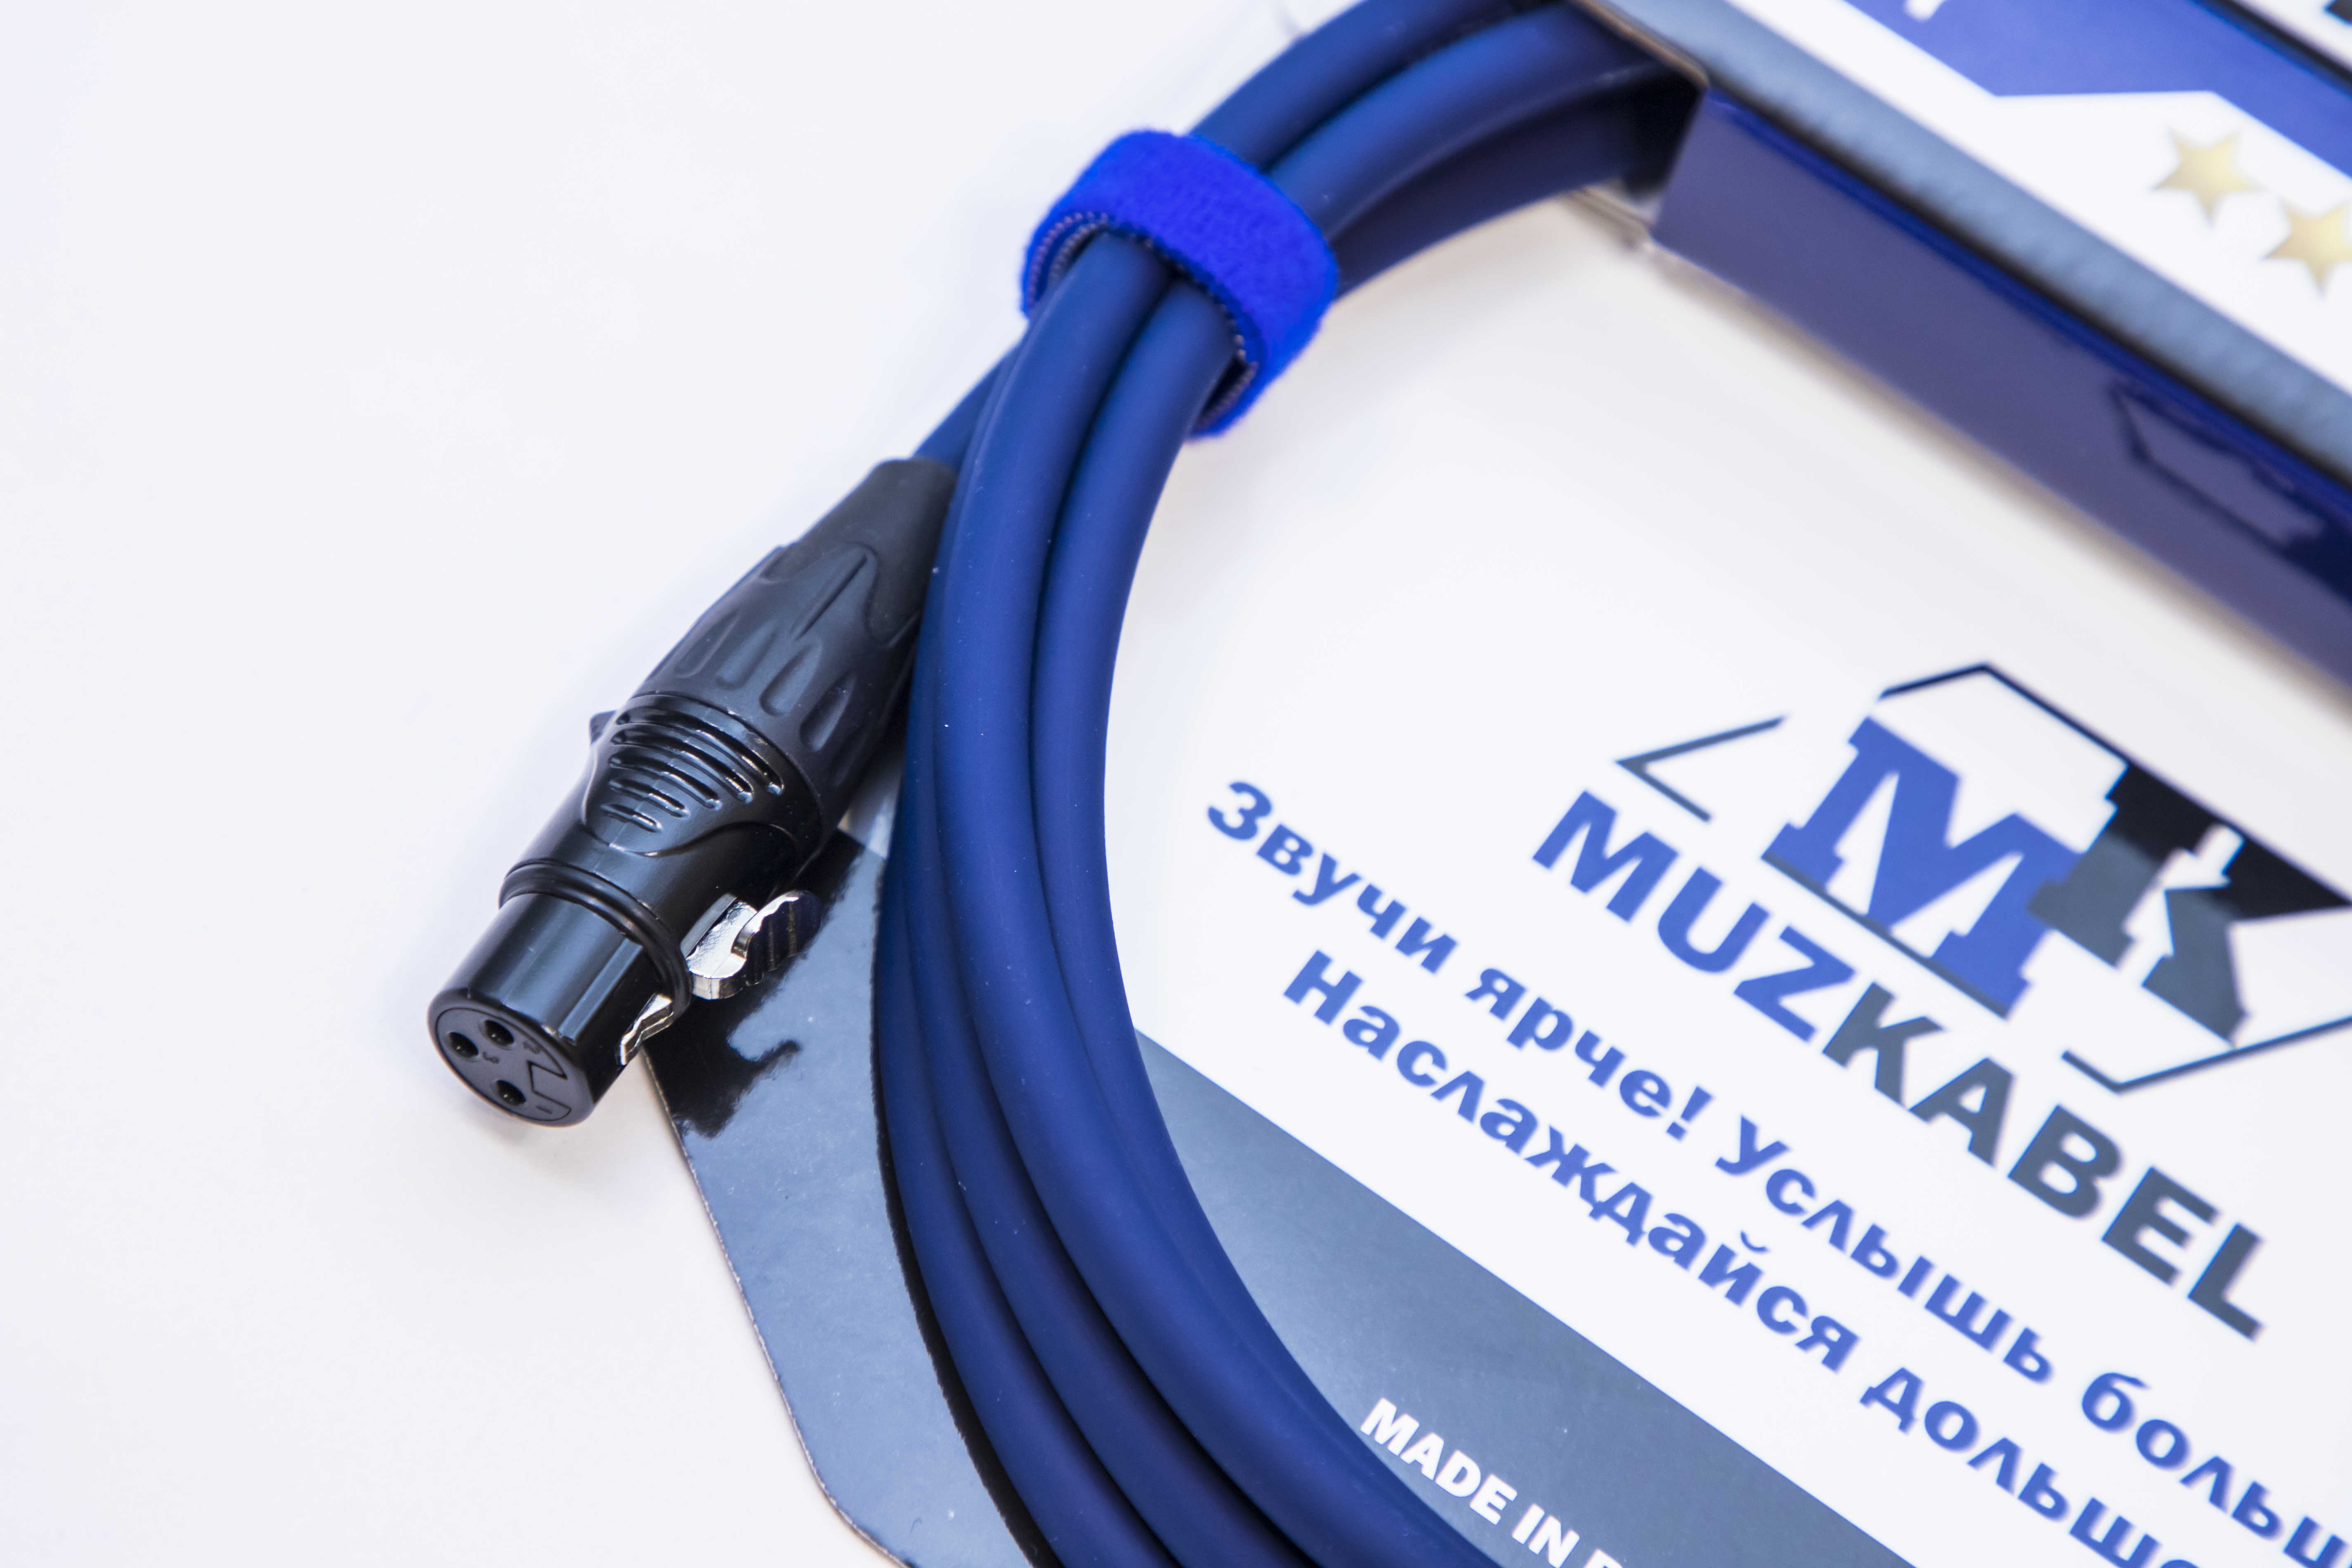 Микрофонный кабель MUZKABEL XJFMK1S - 1 метр, JACK (моно) - XLR (мама)